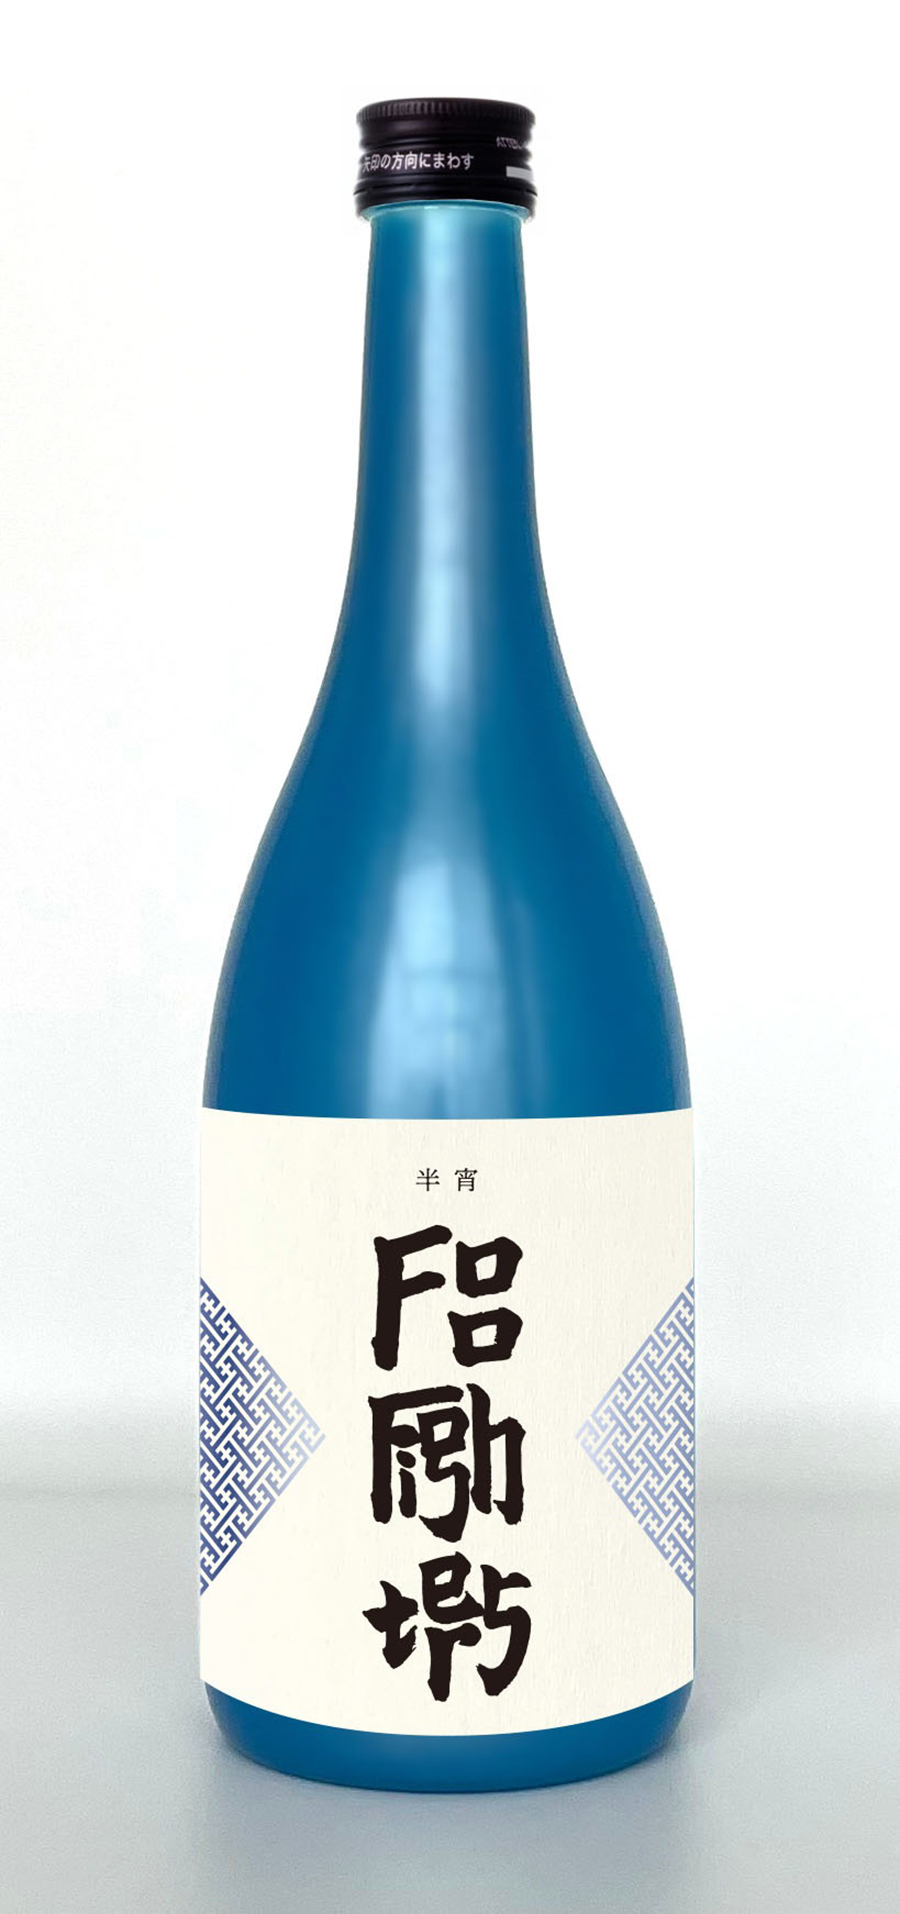 Foo Sake 米バンド フー ファイターズ が日本酒プロデュース 楽曲聞かせて醸造した完全オリジナル ねとらぼ